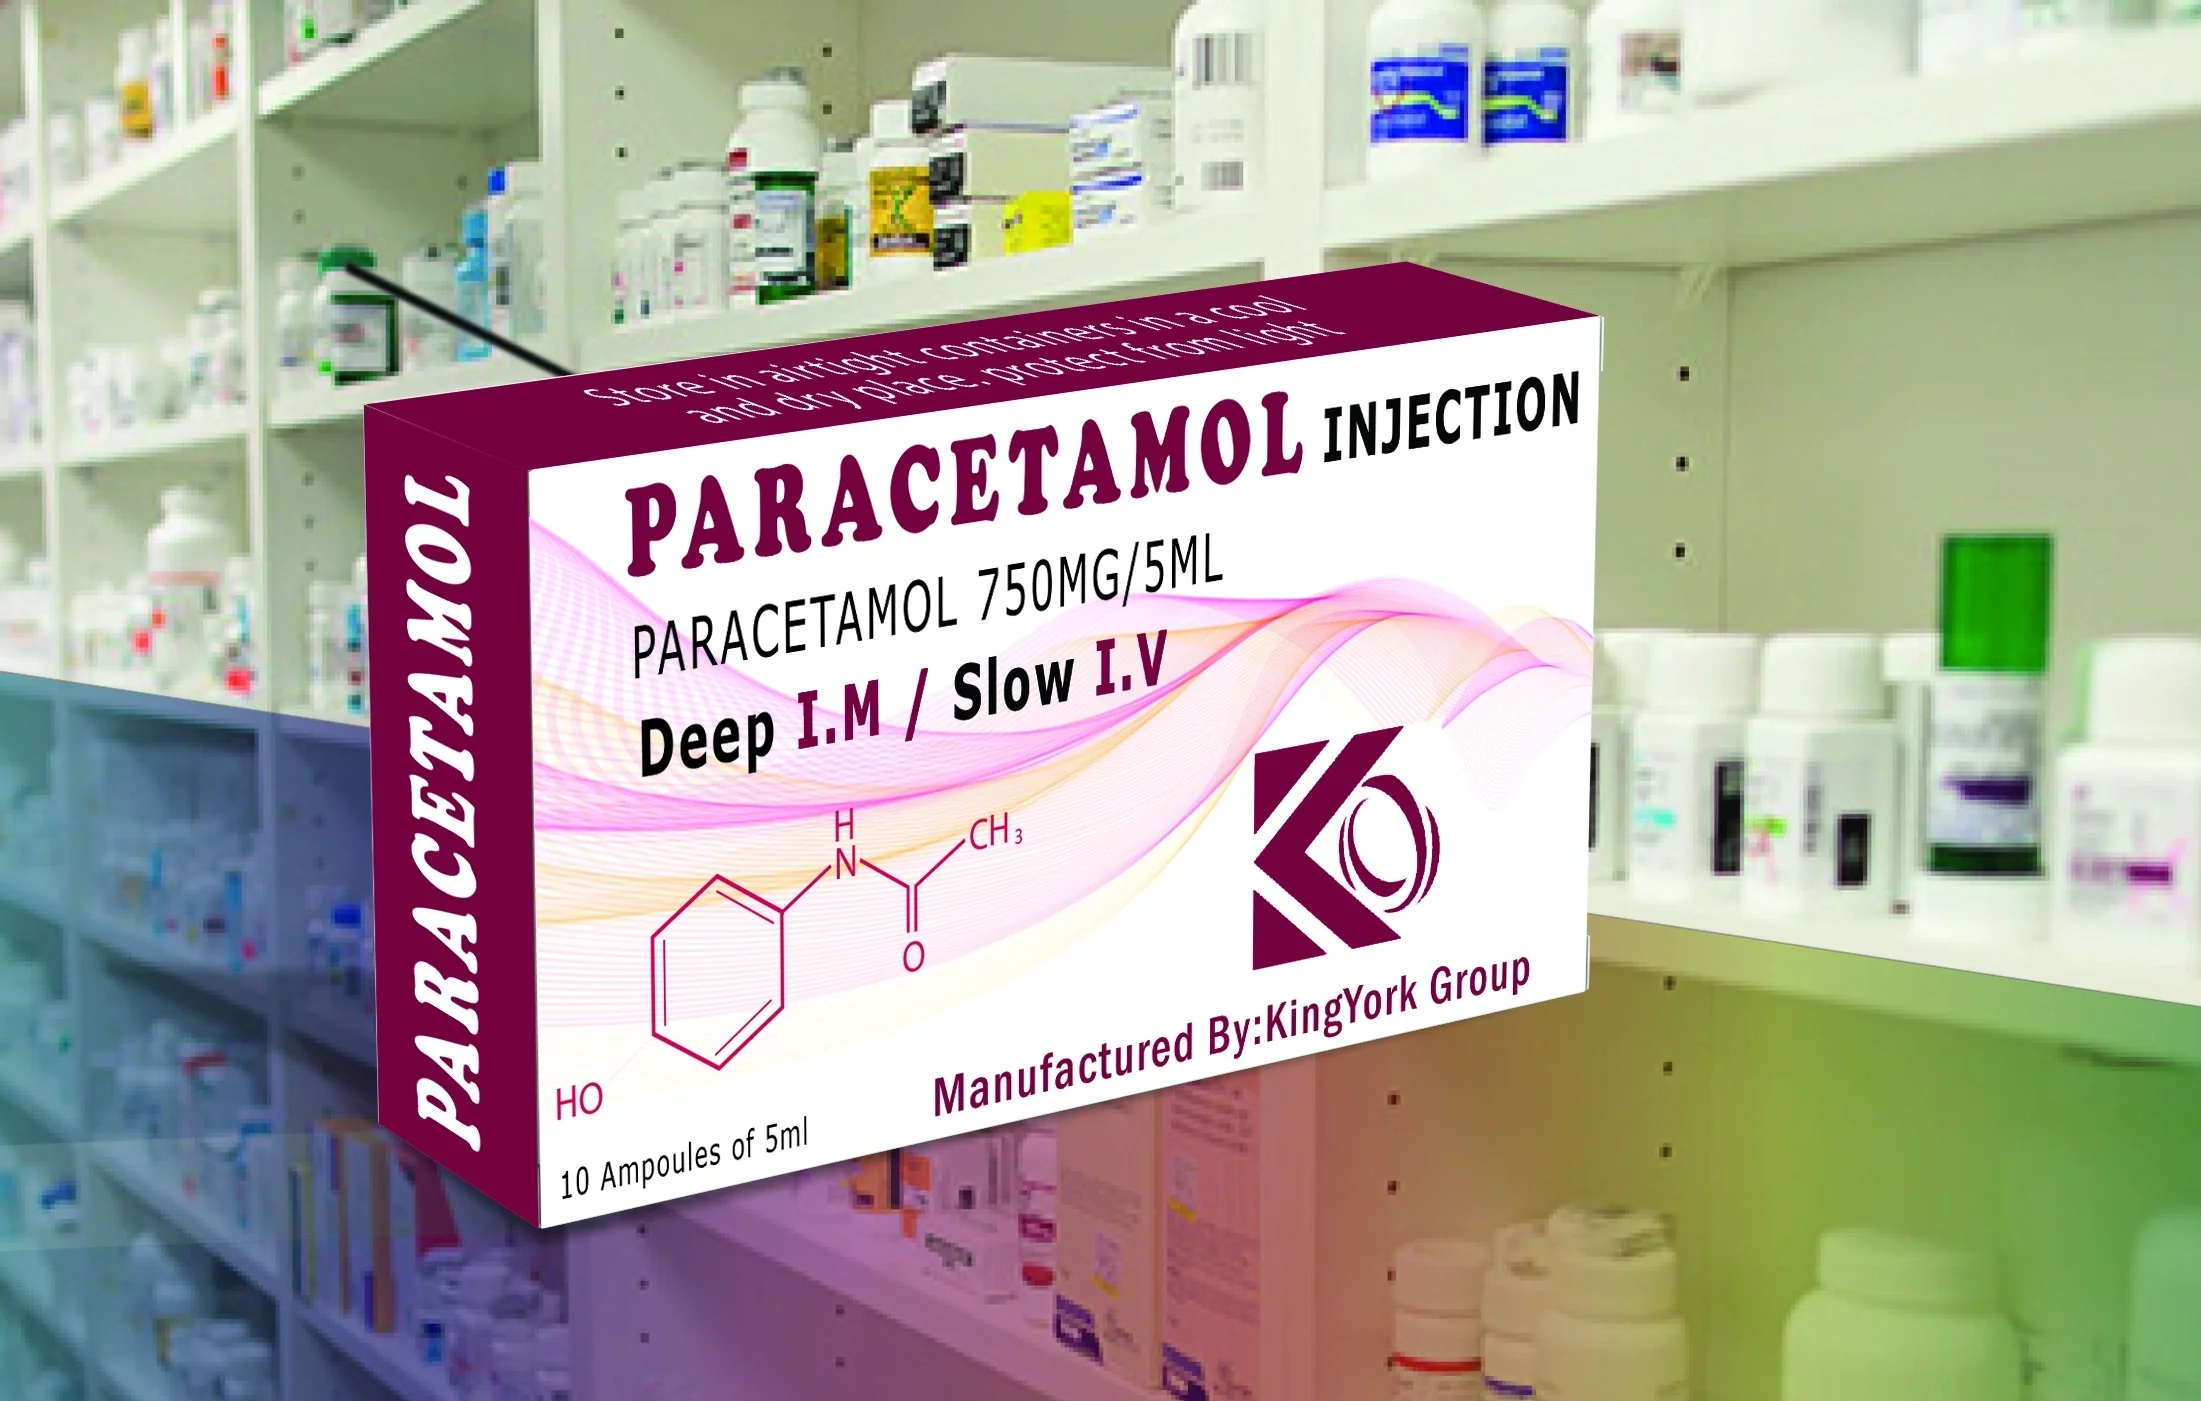 'paracetamol injections', 'analgesic ampoules', 'paracetamol 750mg injection', 'paracetamol'